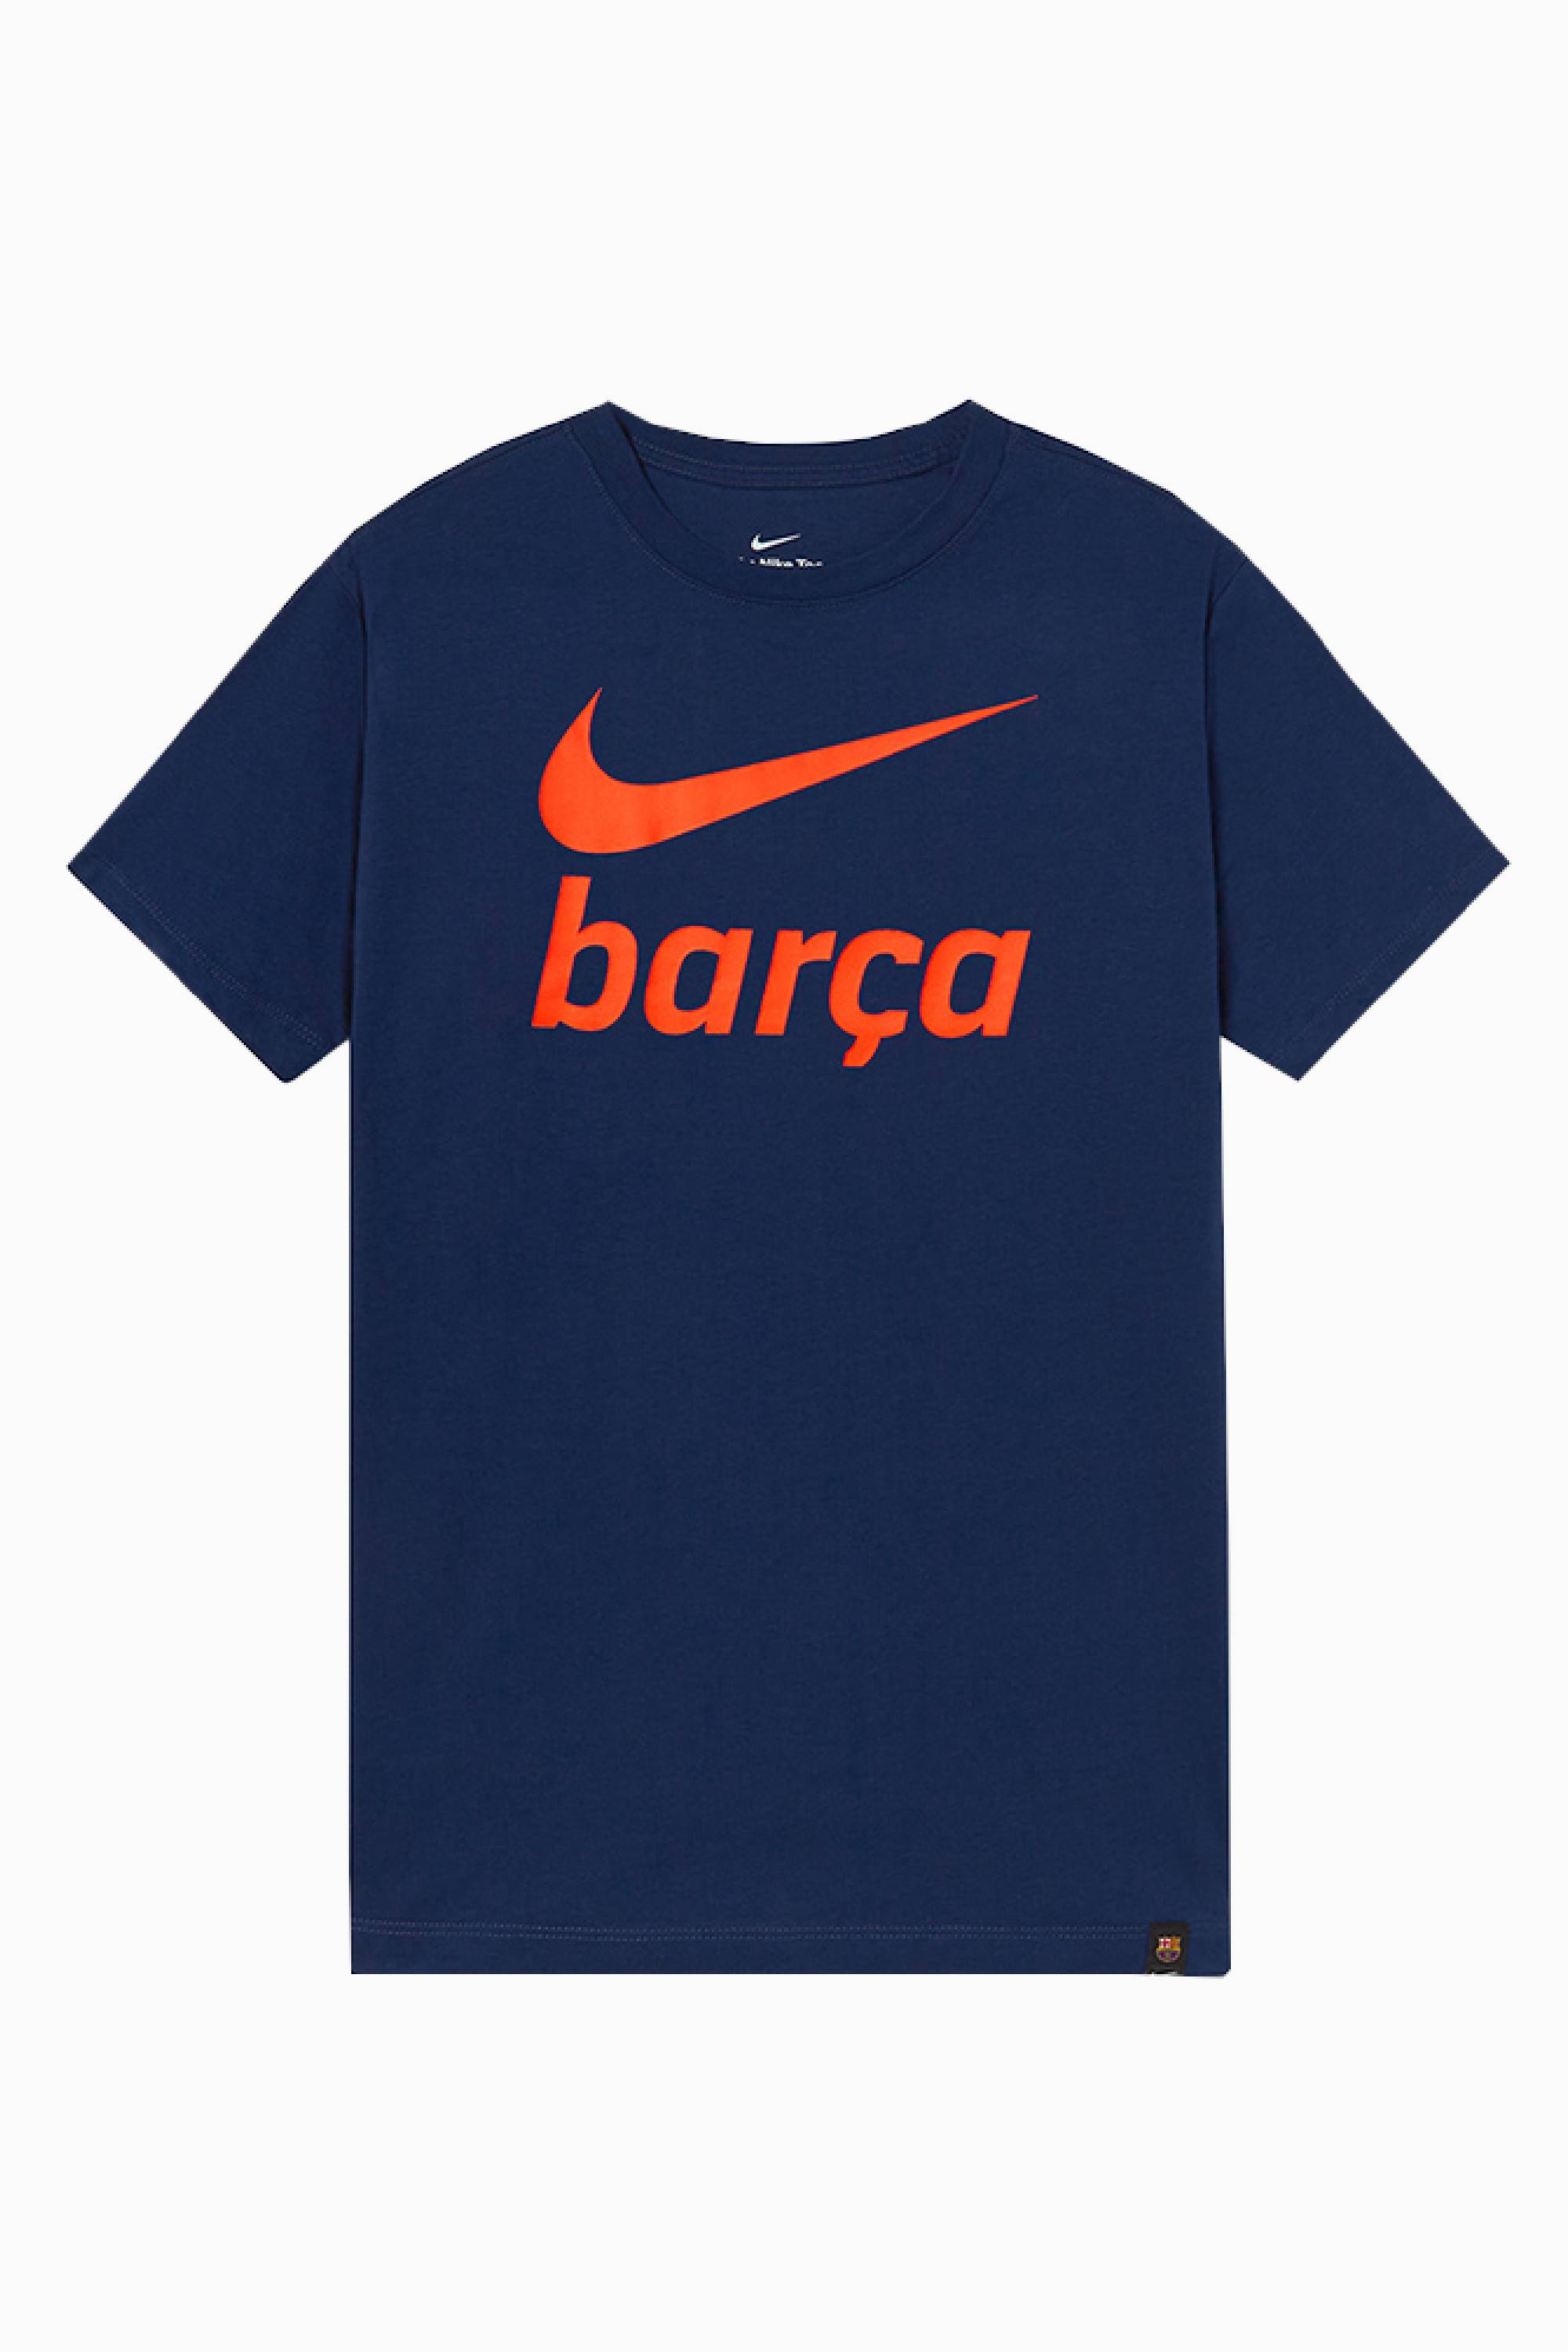 Nike FC Barcelona tričko tmavomodré detské - SKLADOM